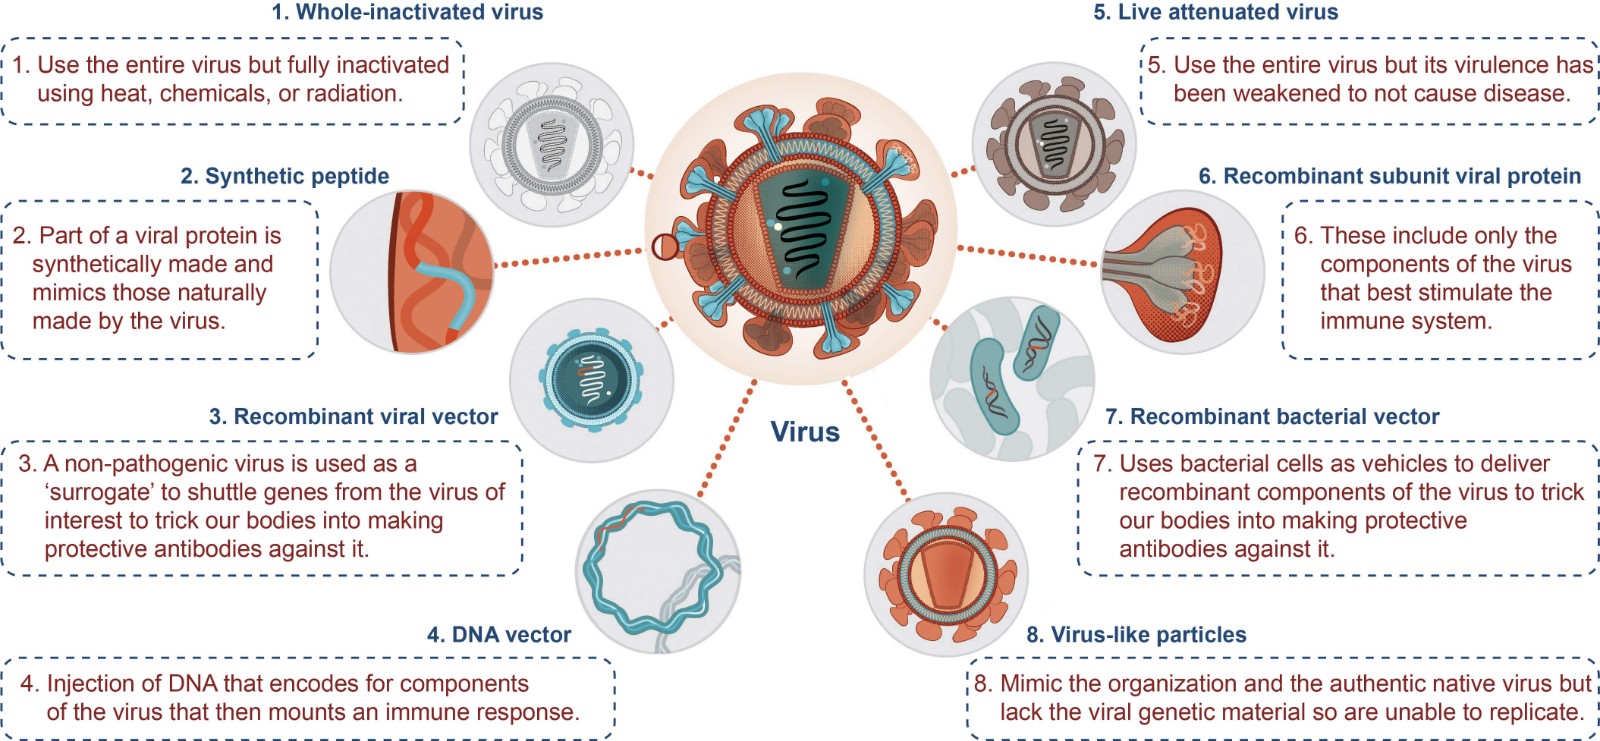 Types of virus vaccines.